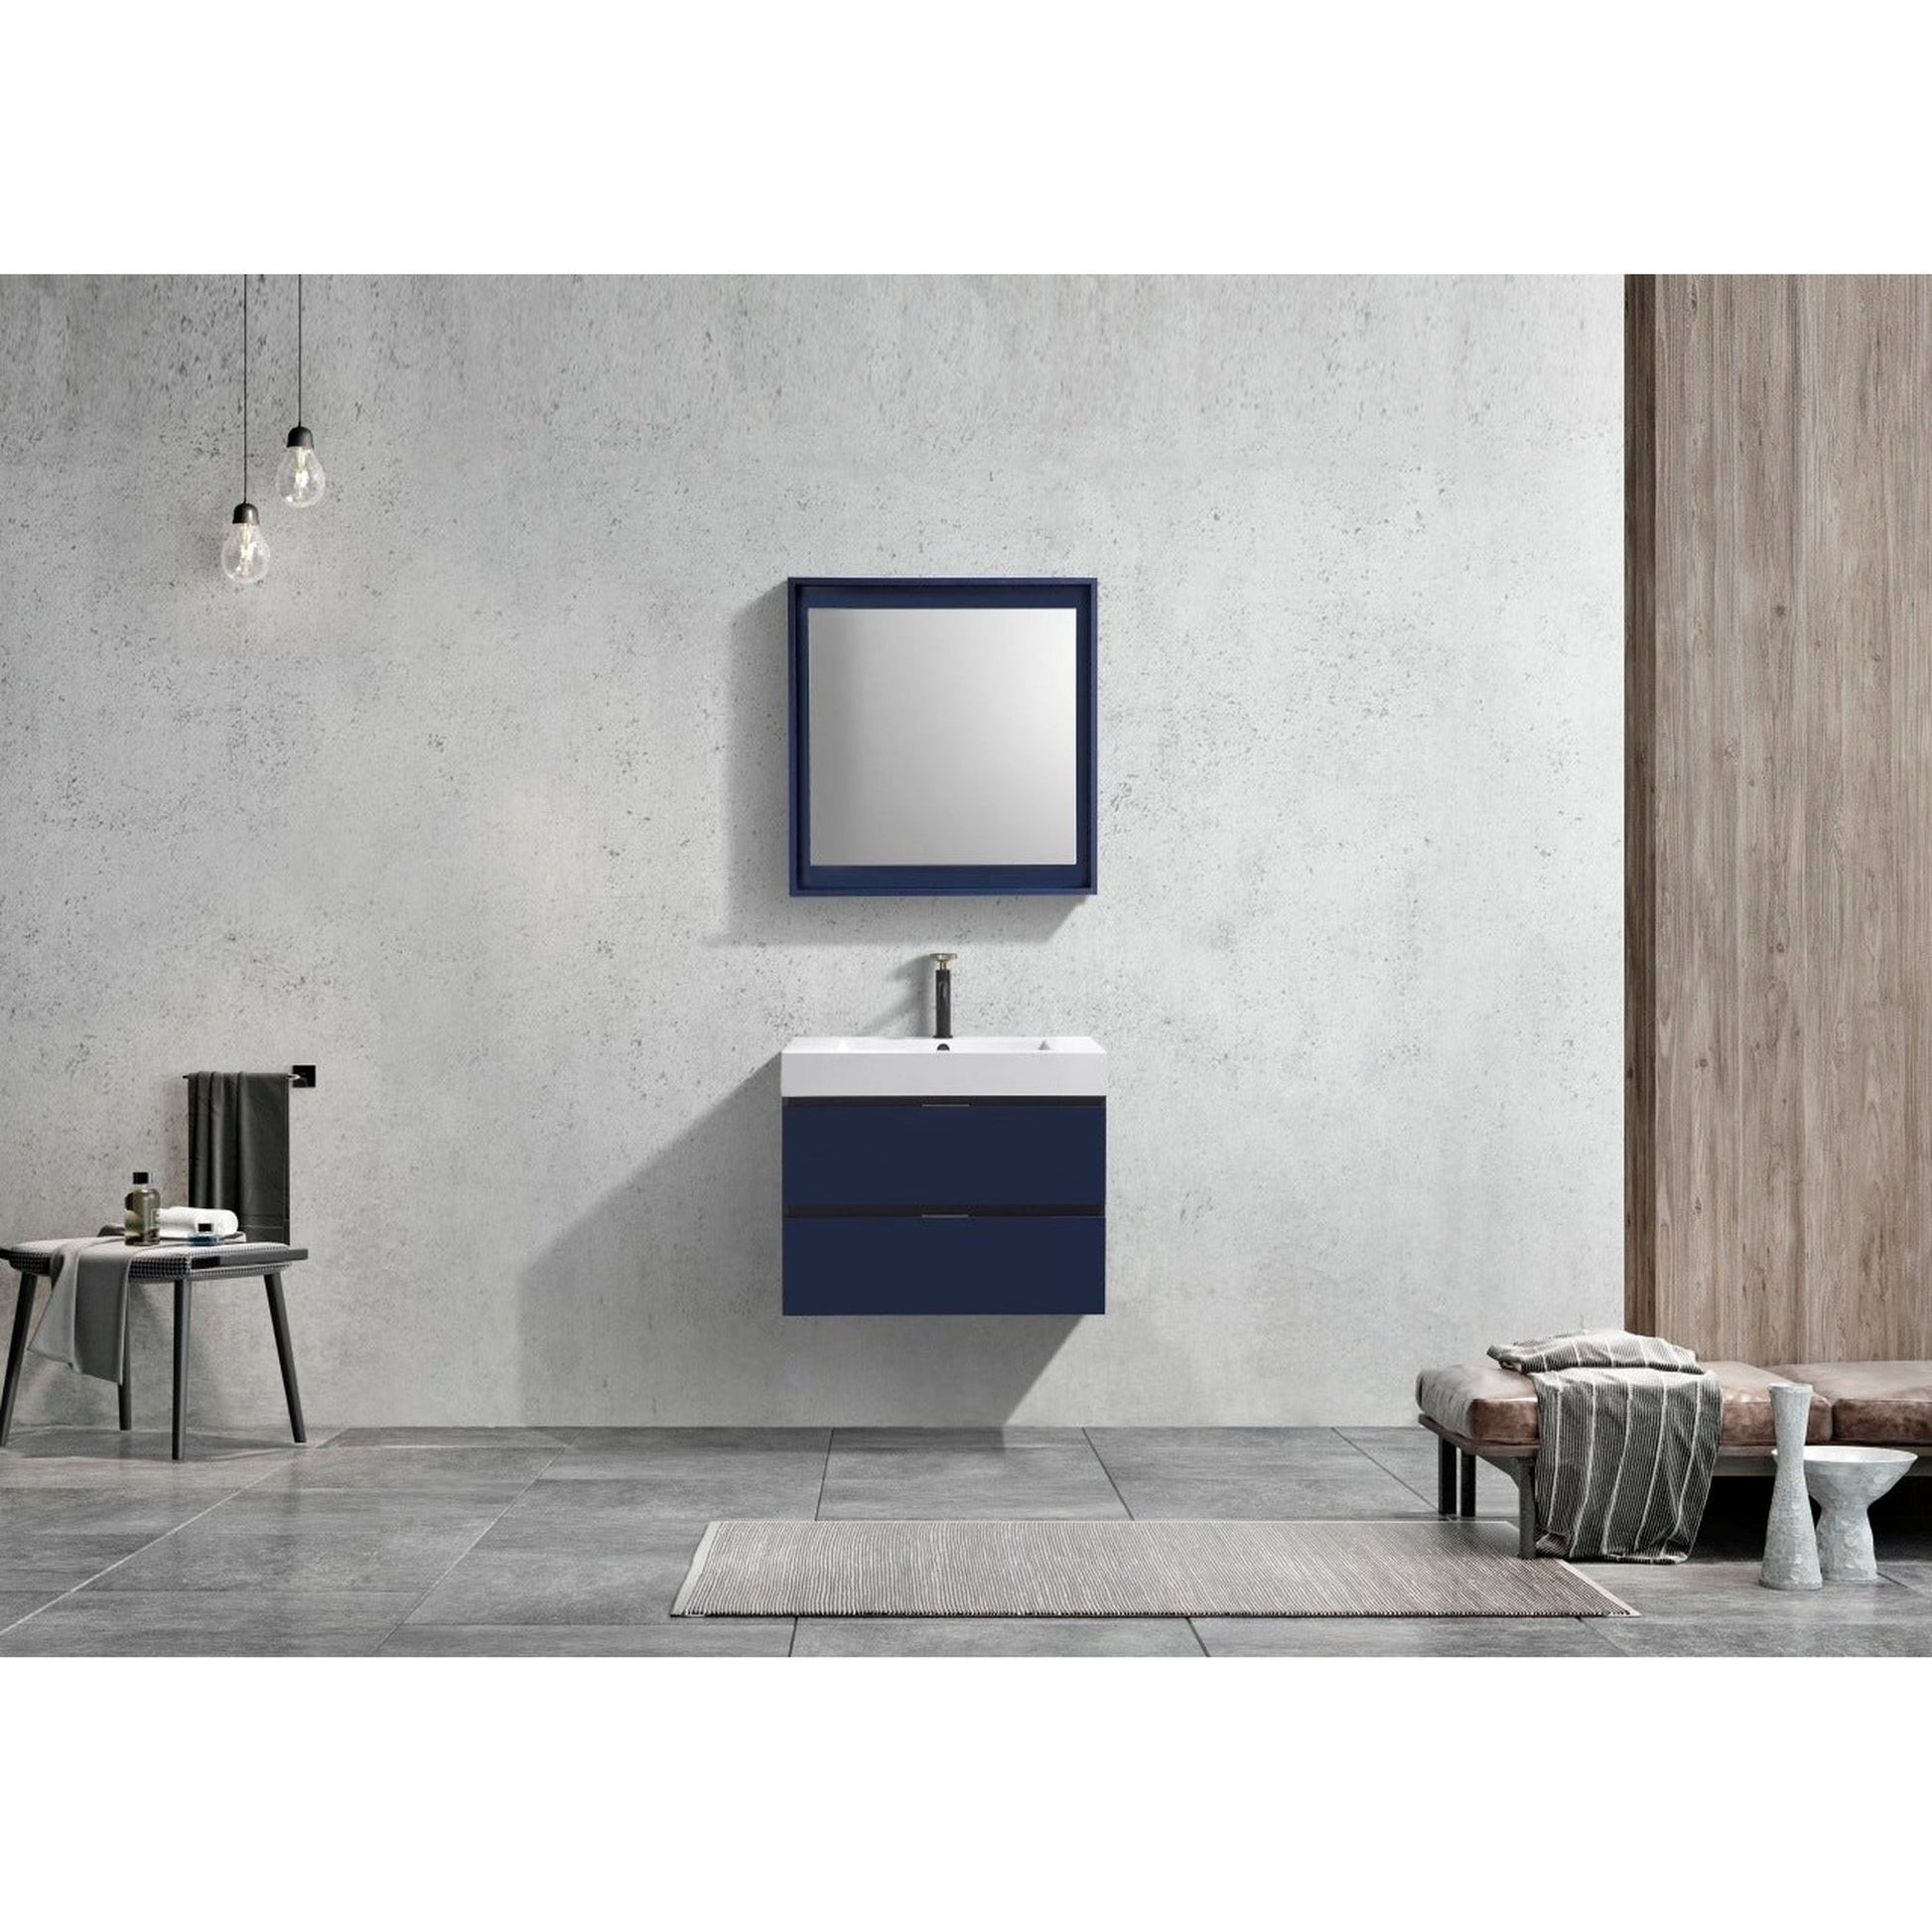 KubeBath Bliss 30" Blue Wall-Mounted Modern Bathroom Vanity With Single Integrated Acrylic Sink With Overflow